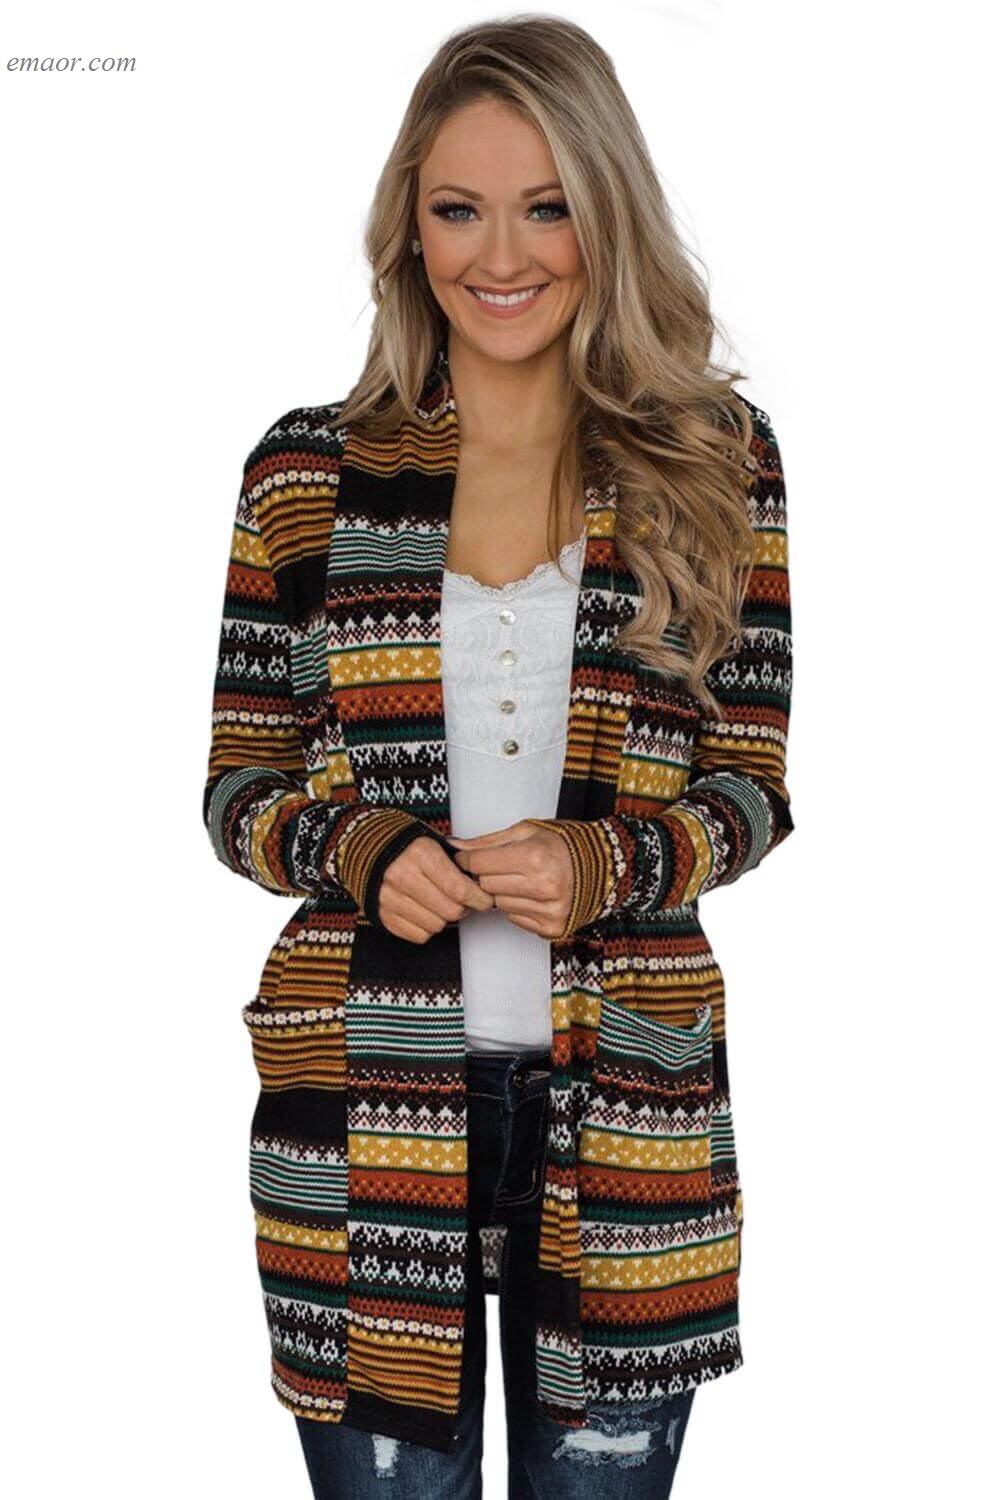 Winter Outerwear Fashion Wholesale Women's Outerwear Multicolor Unforgettable Printed Cardigan Coat 